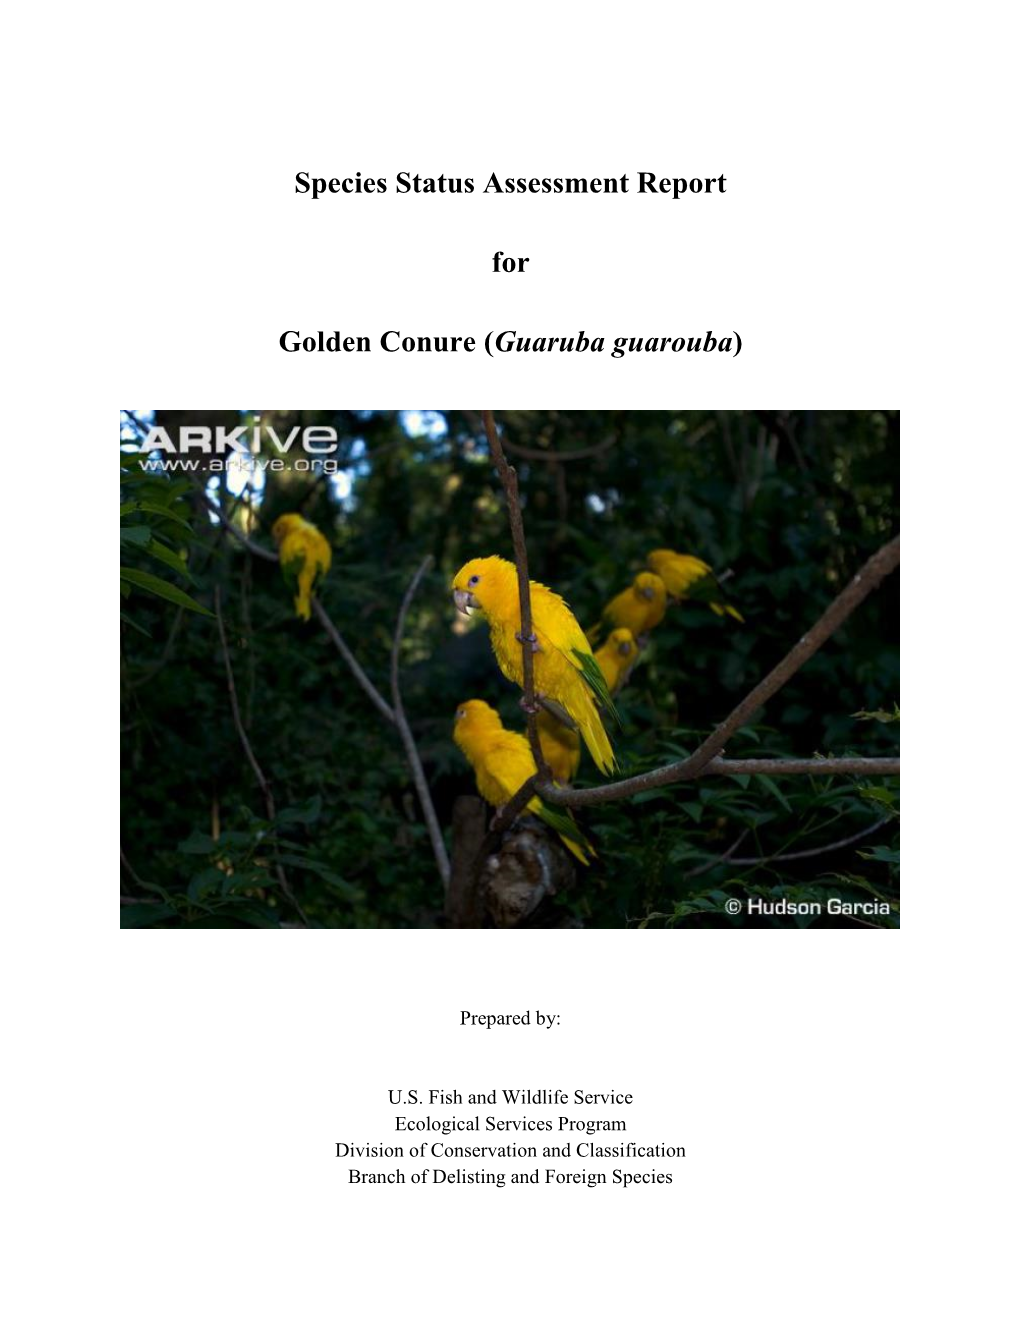 Species Status Assessment Report for Golden Conure (Guaruba Guarouba), 63 Pp